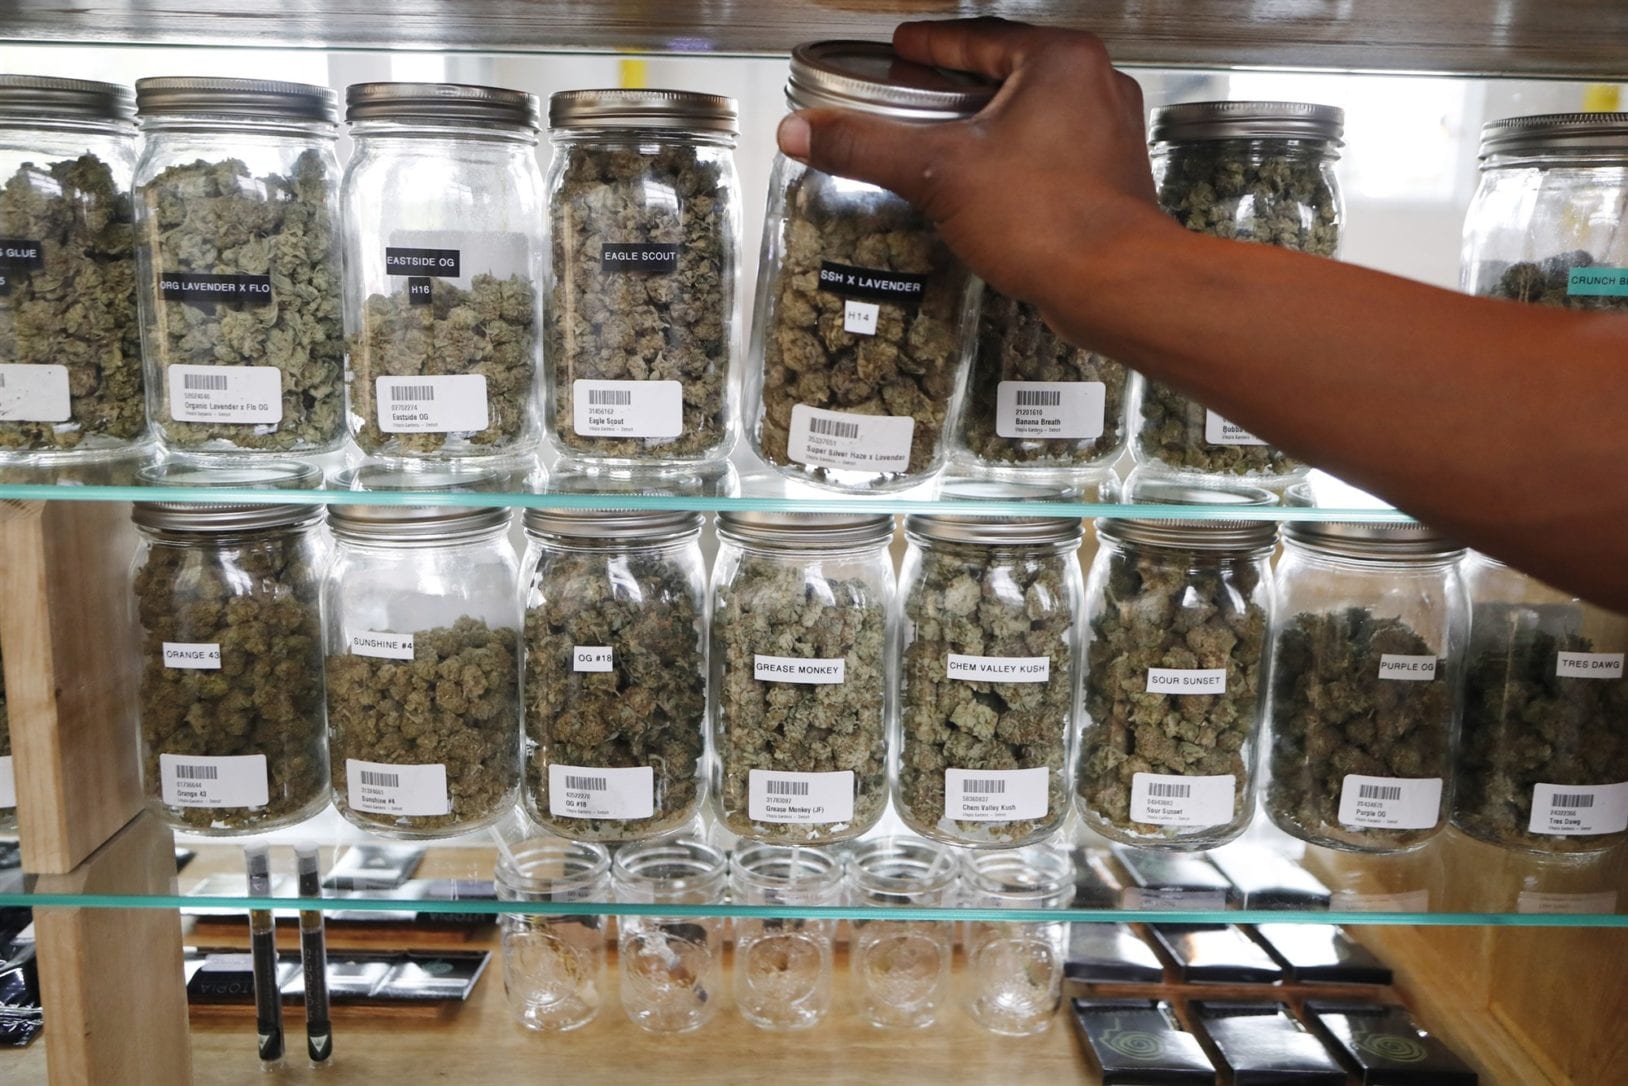 Placing jars of cannabis on shelf.